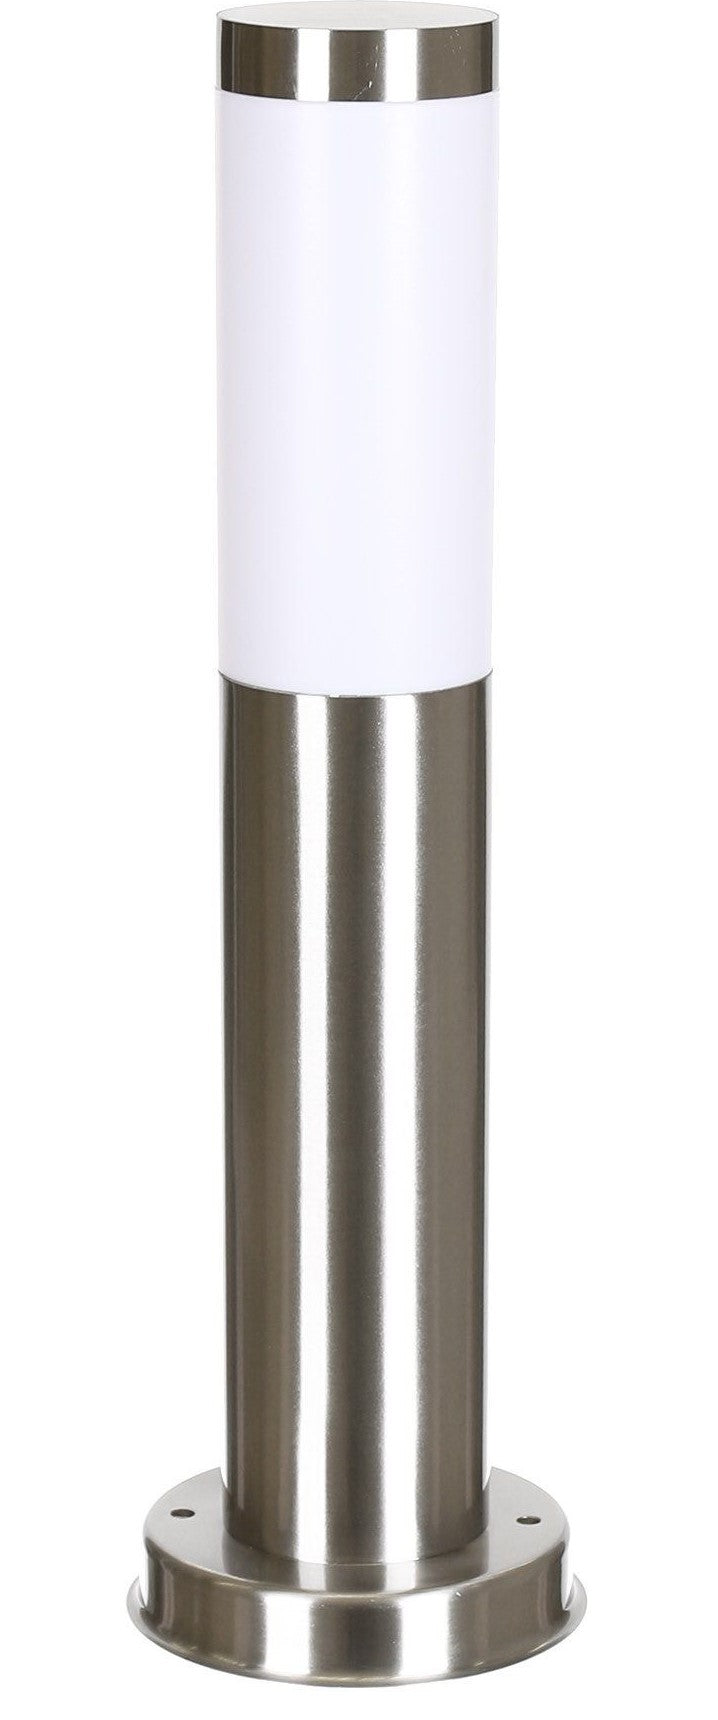 Stalp iluminat exterior, H 45 cm, IP 44, argintiu